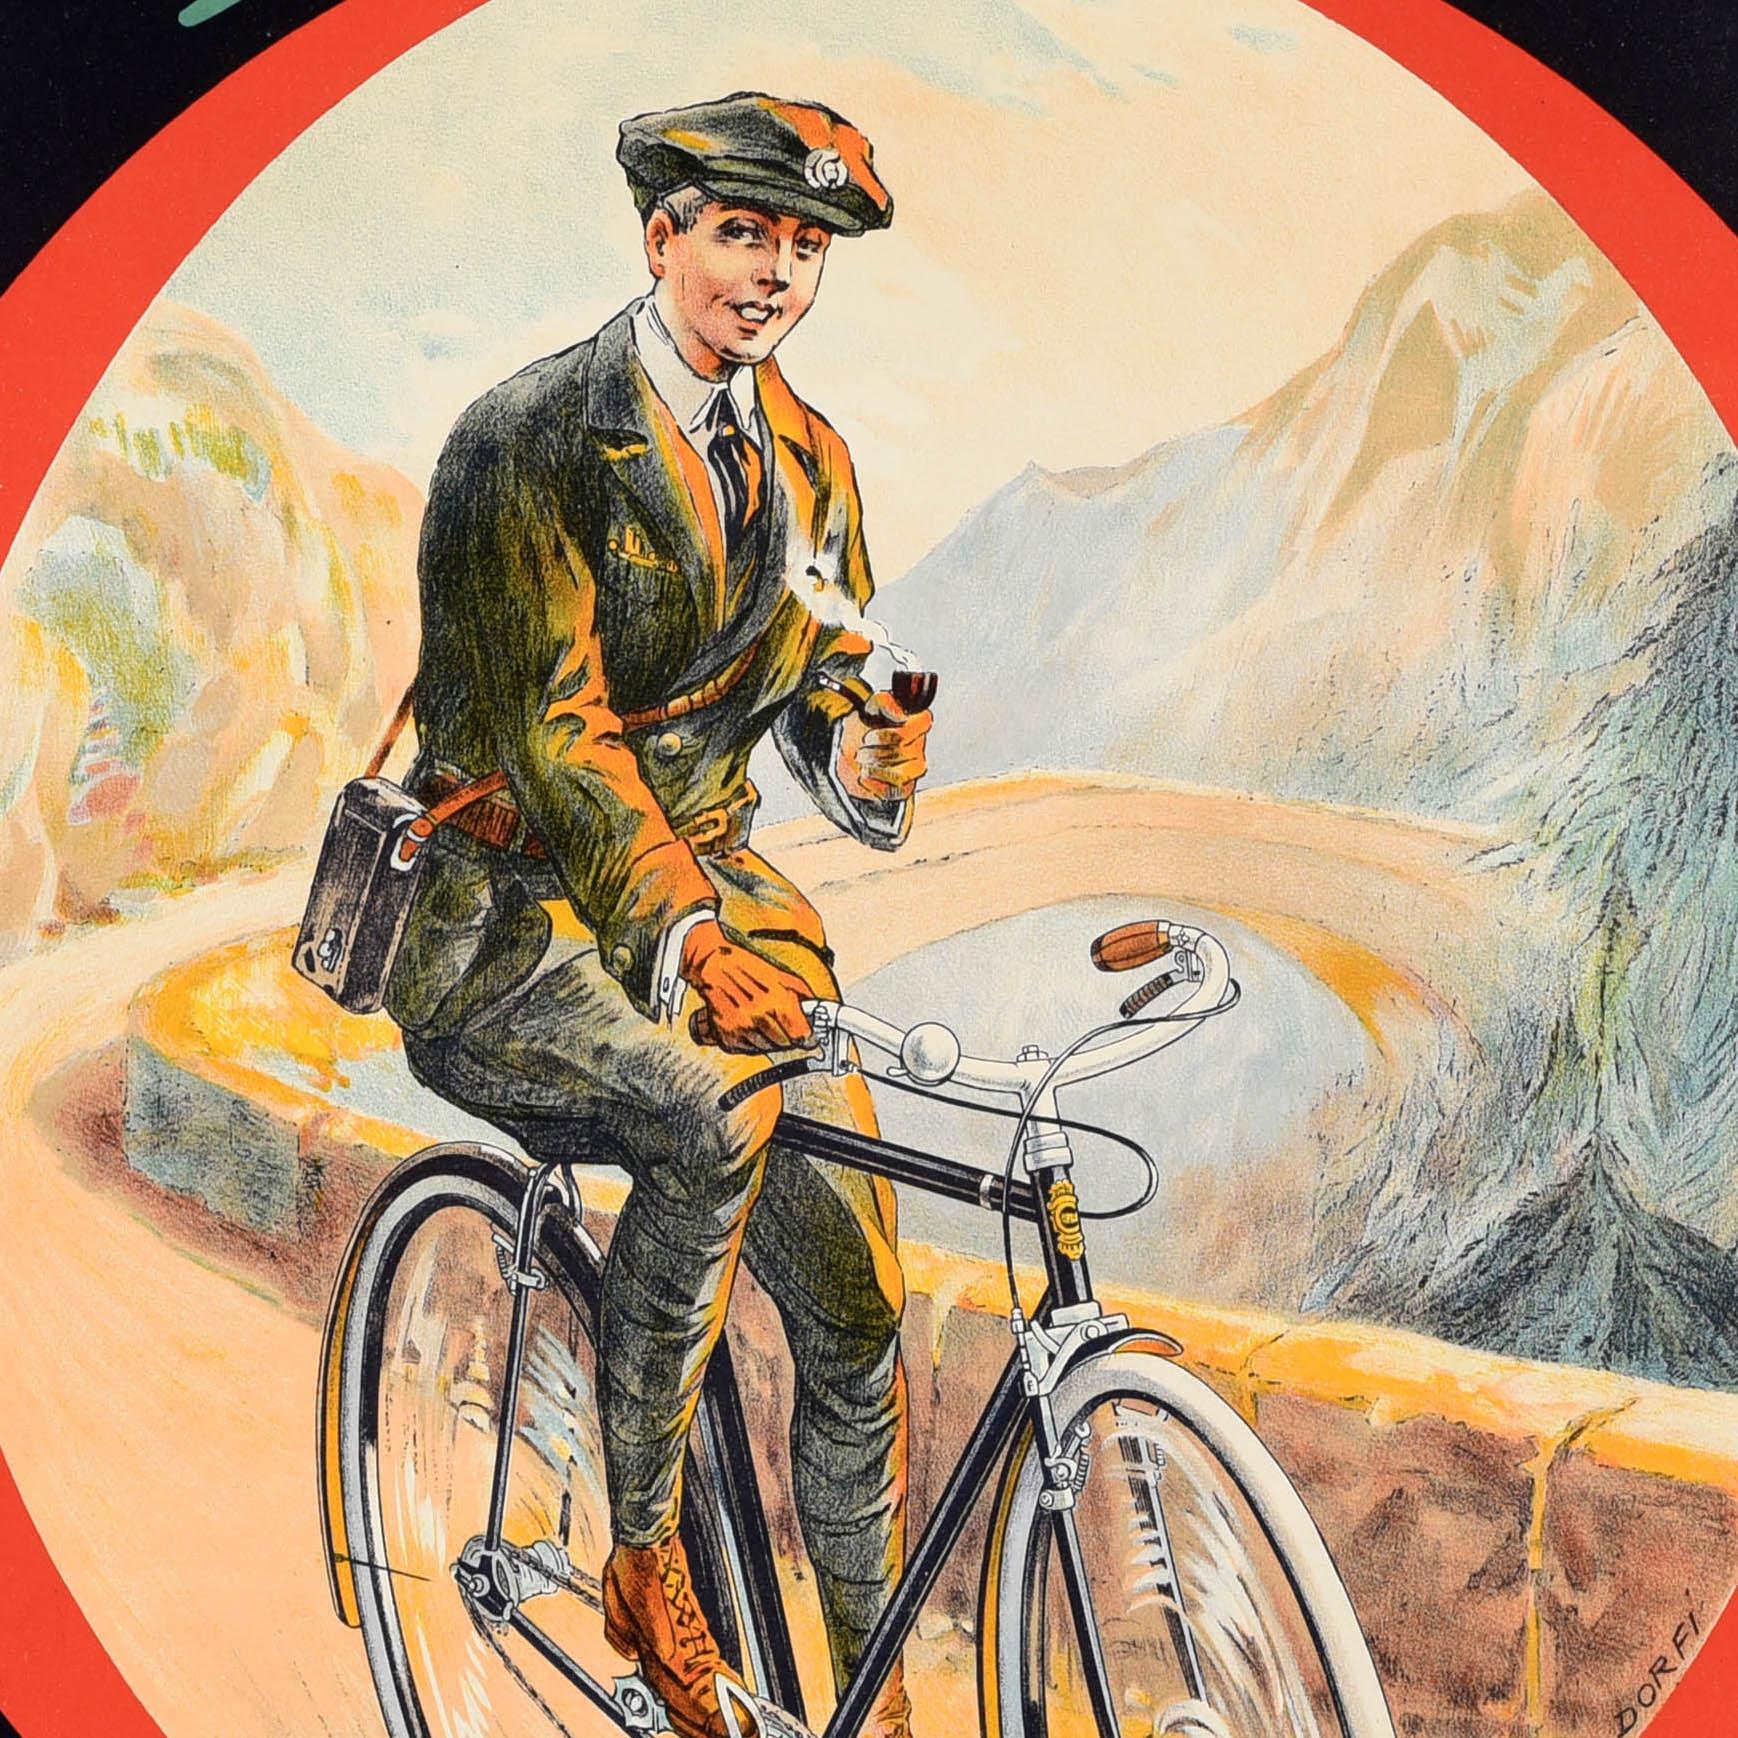 Original Vintage Bike Advertising Poster Omega Cycles Dorfinant Bicycle Design - Print by Dorfi (Albert Dorfinan)